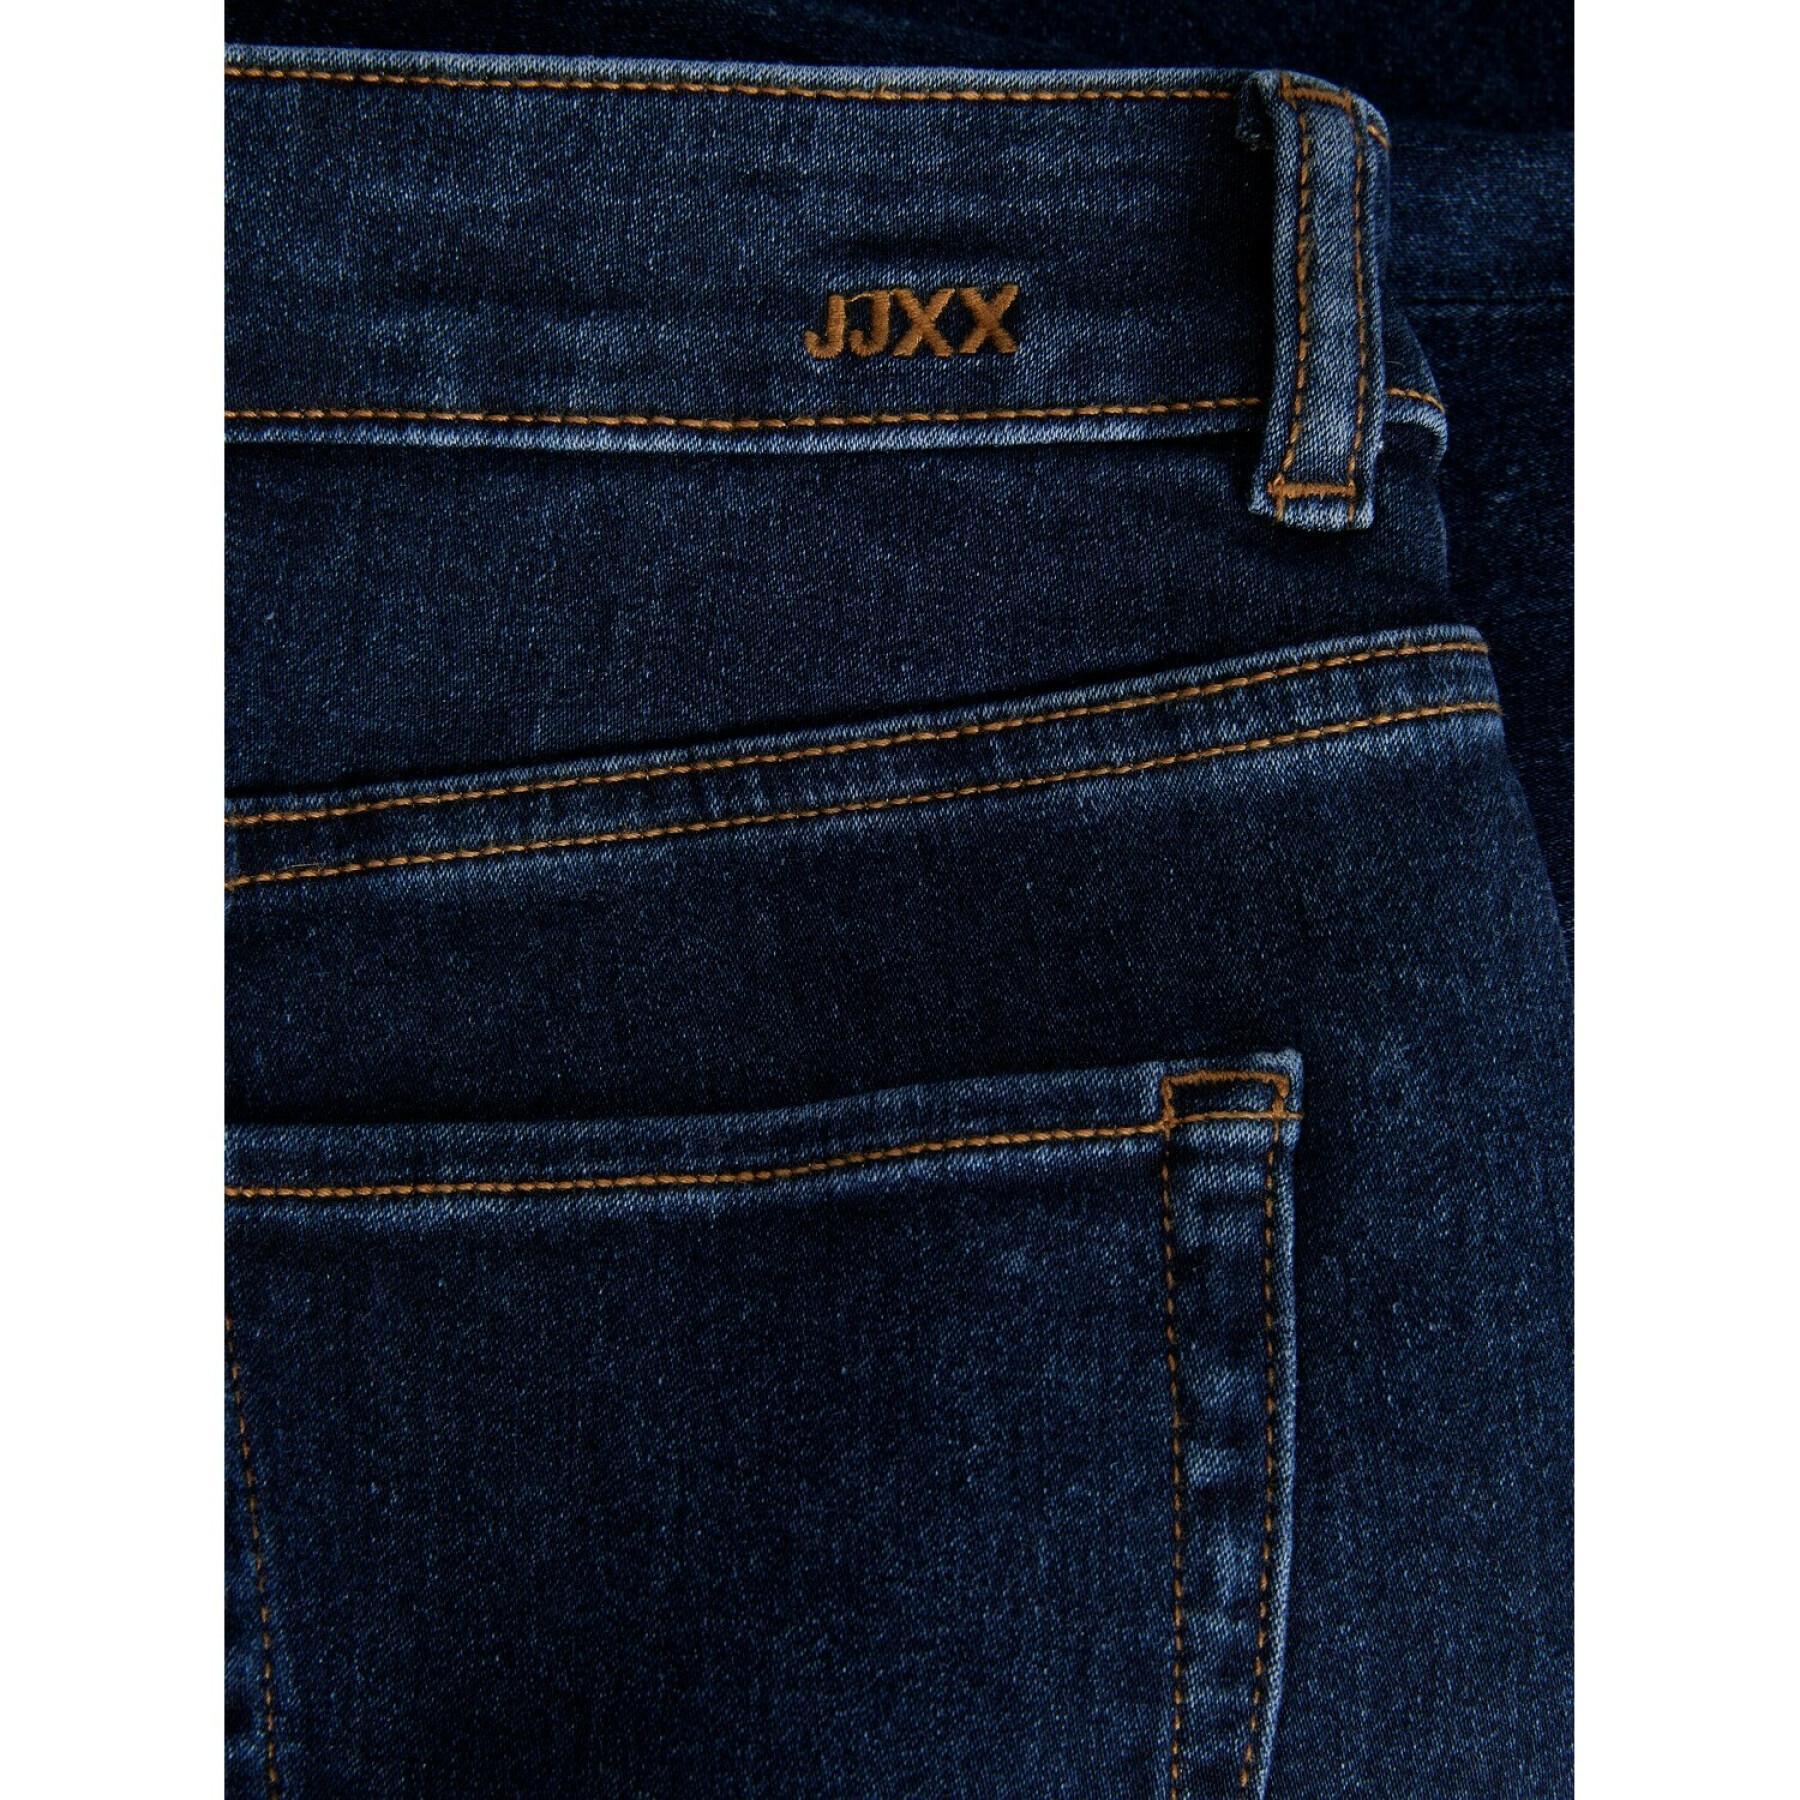 Jeans femme JJXX vienna skinny ns1002